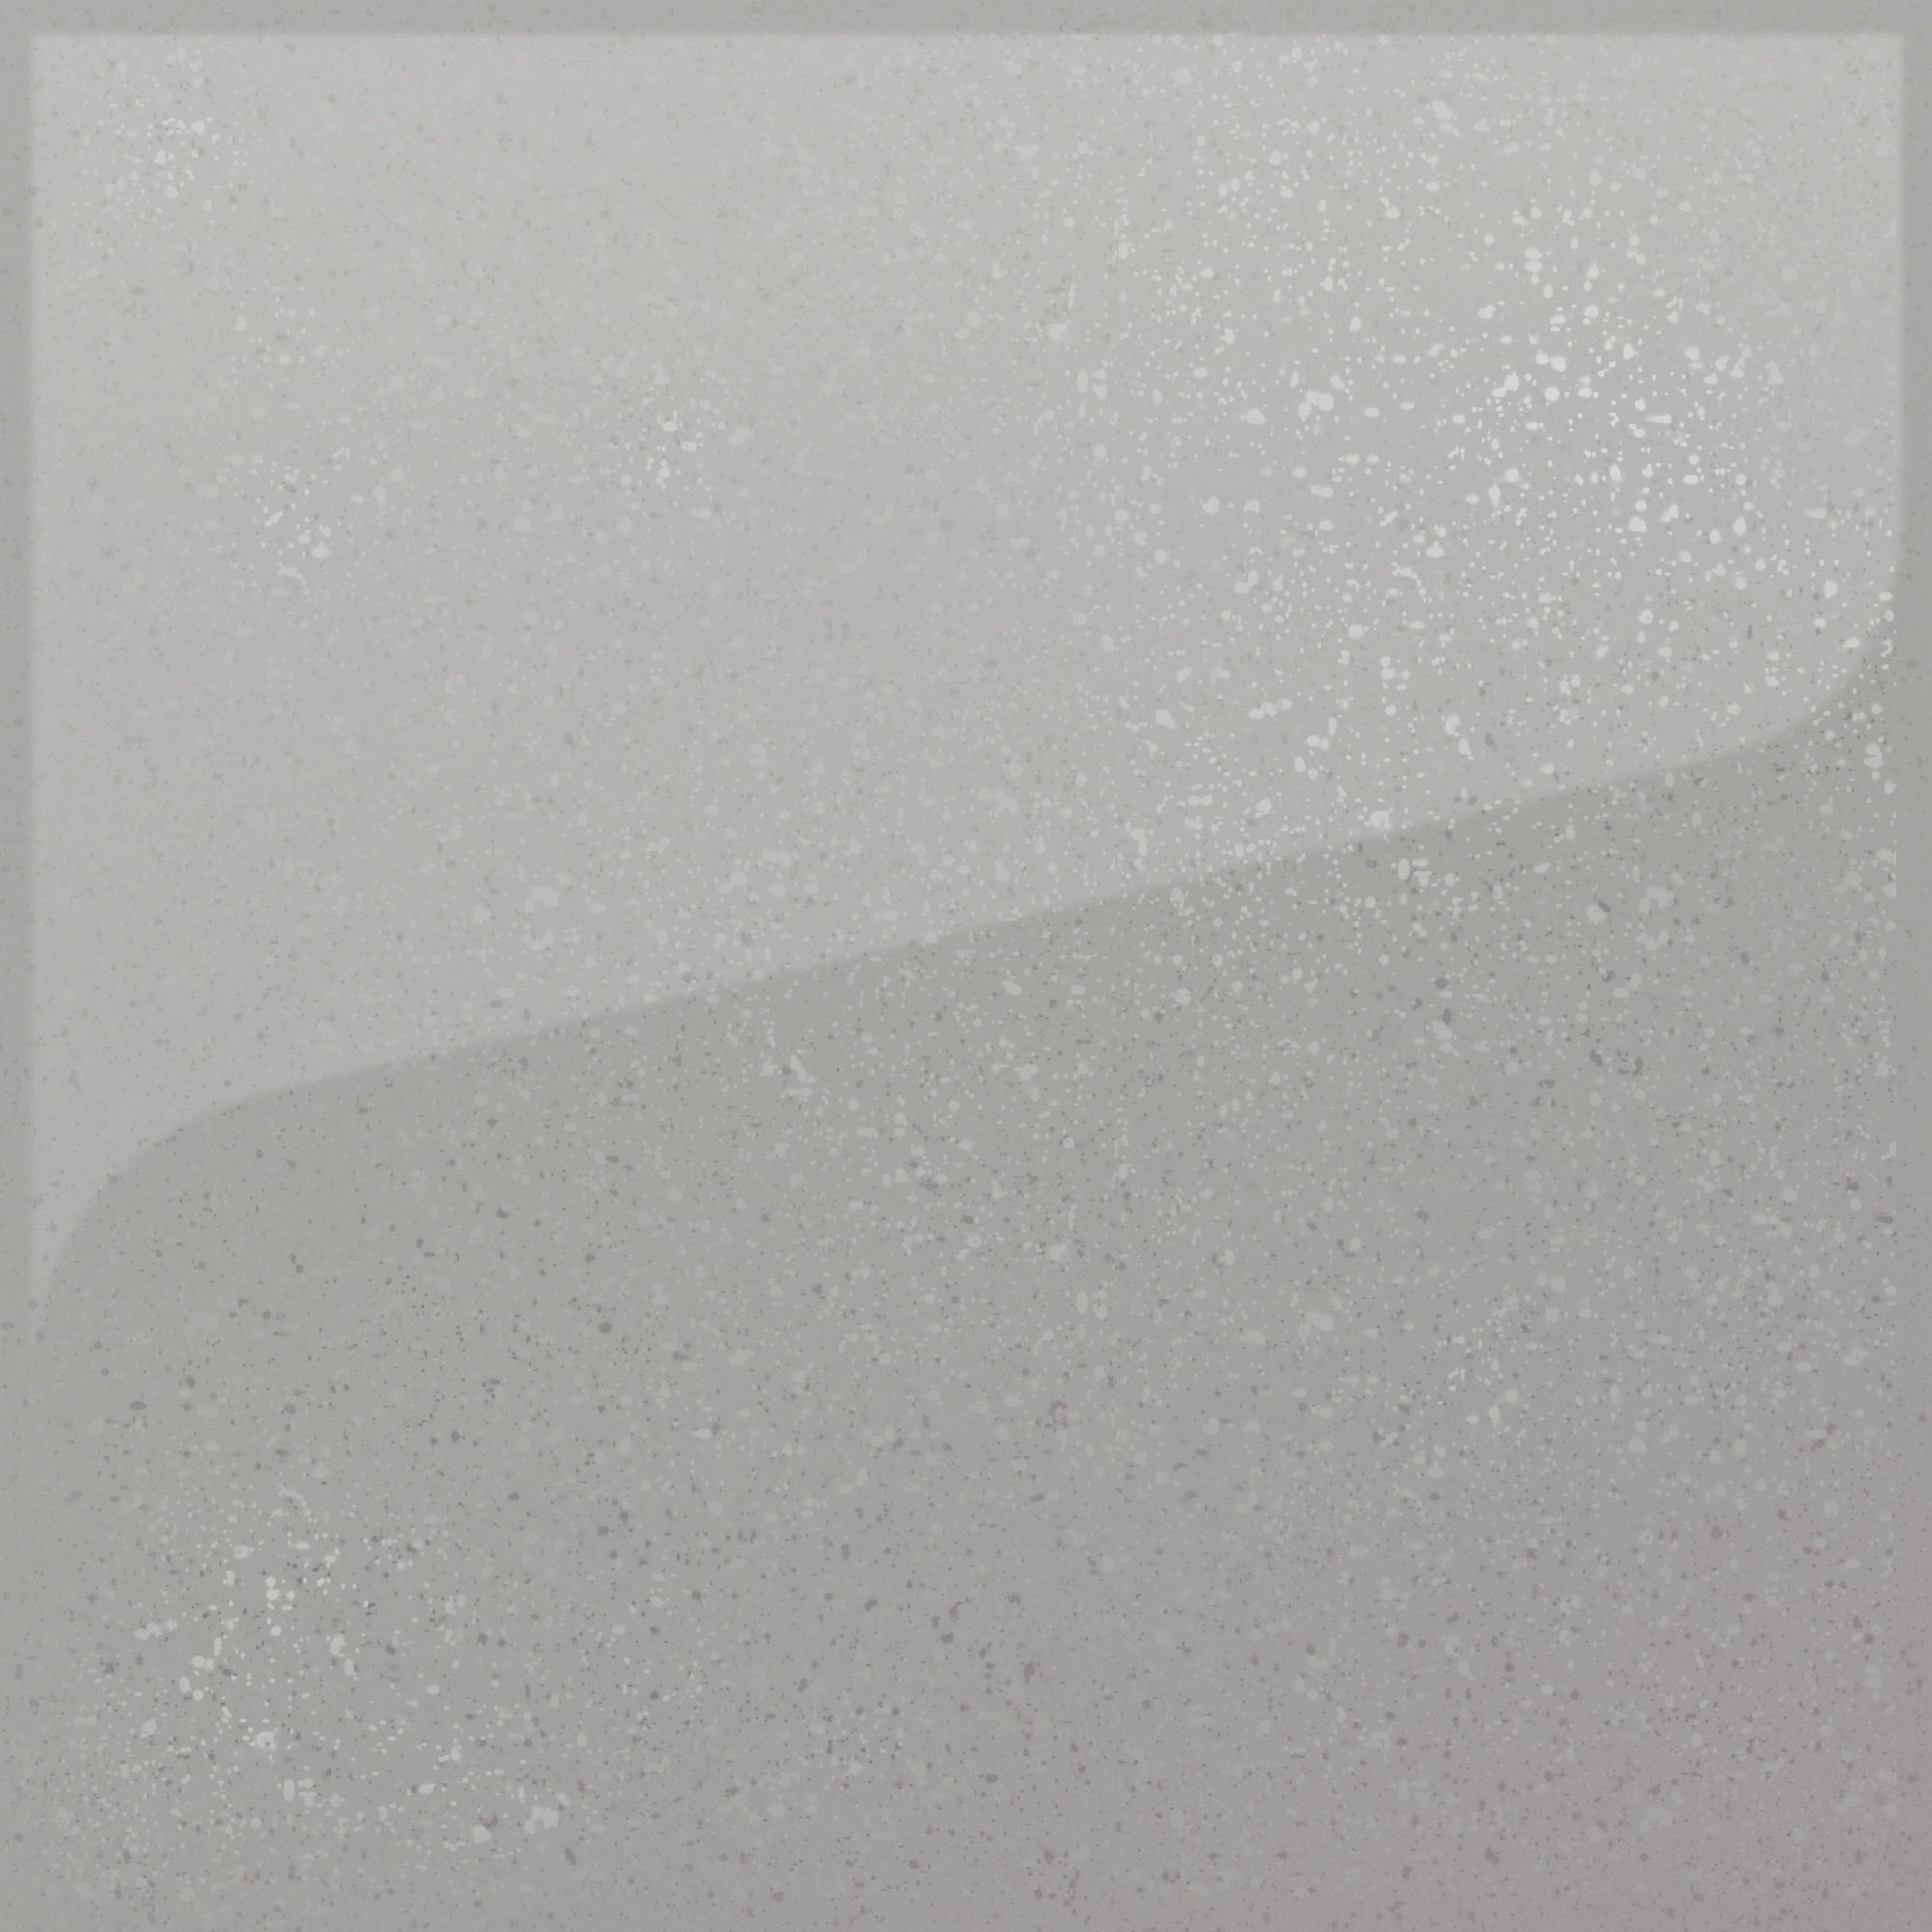 Splashwall Gloss Chrome effect 3 sided Shower Panel kit (L)1200mm (W)1200mm (T)4mm